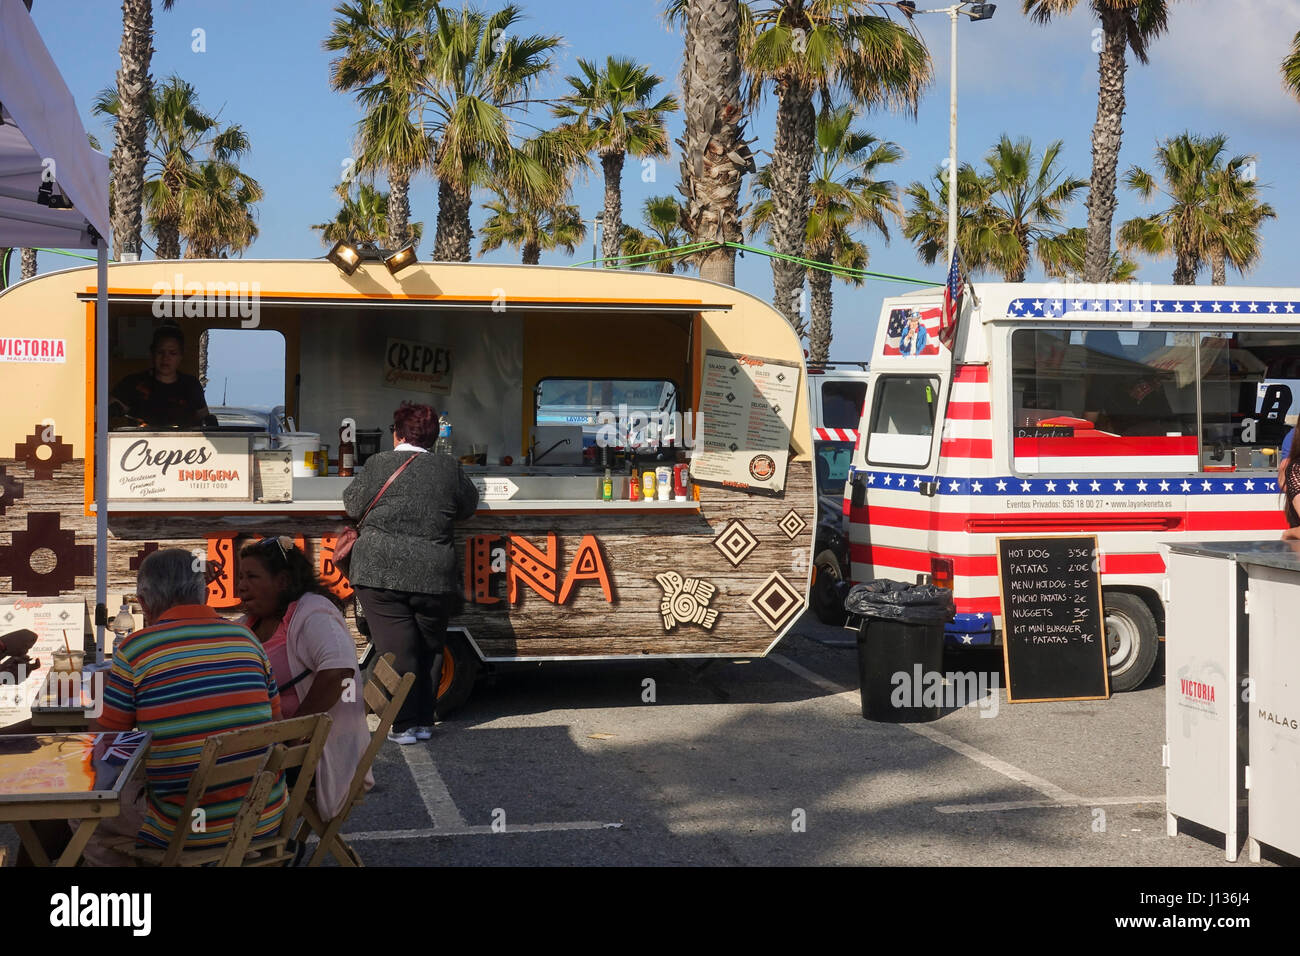 Caravan at Food trucks festival, festive, celebration in Port of Benalmadena, Andalusia, Spain Stock Photo